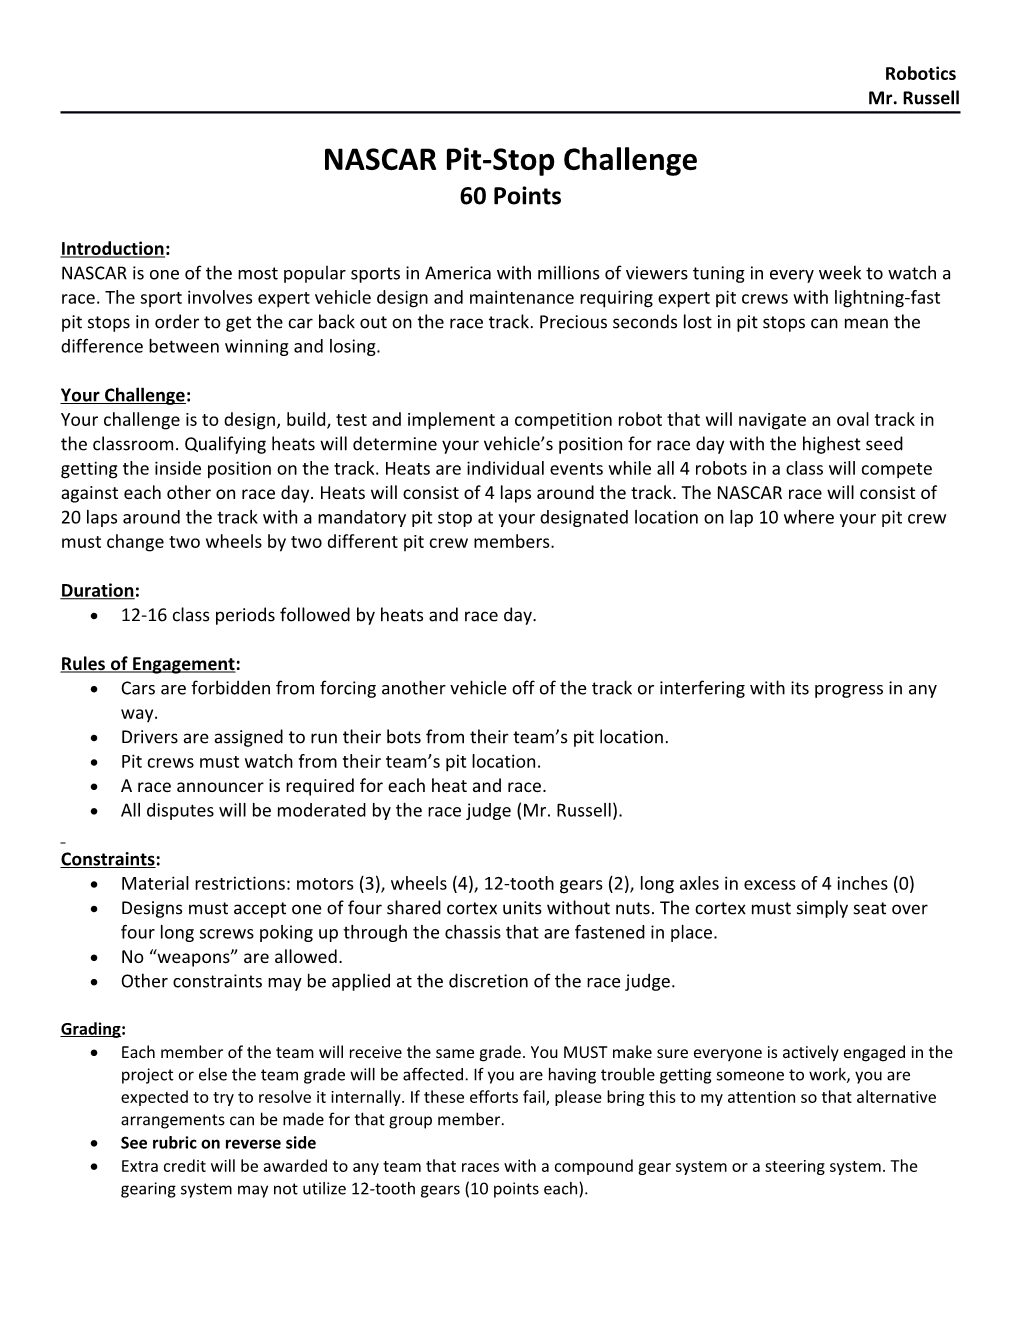 NASCAR Pit-Stop Challenge